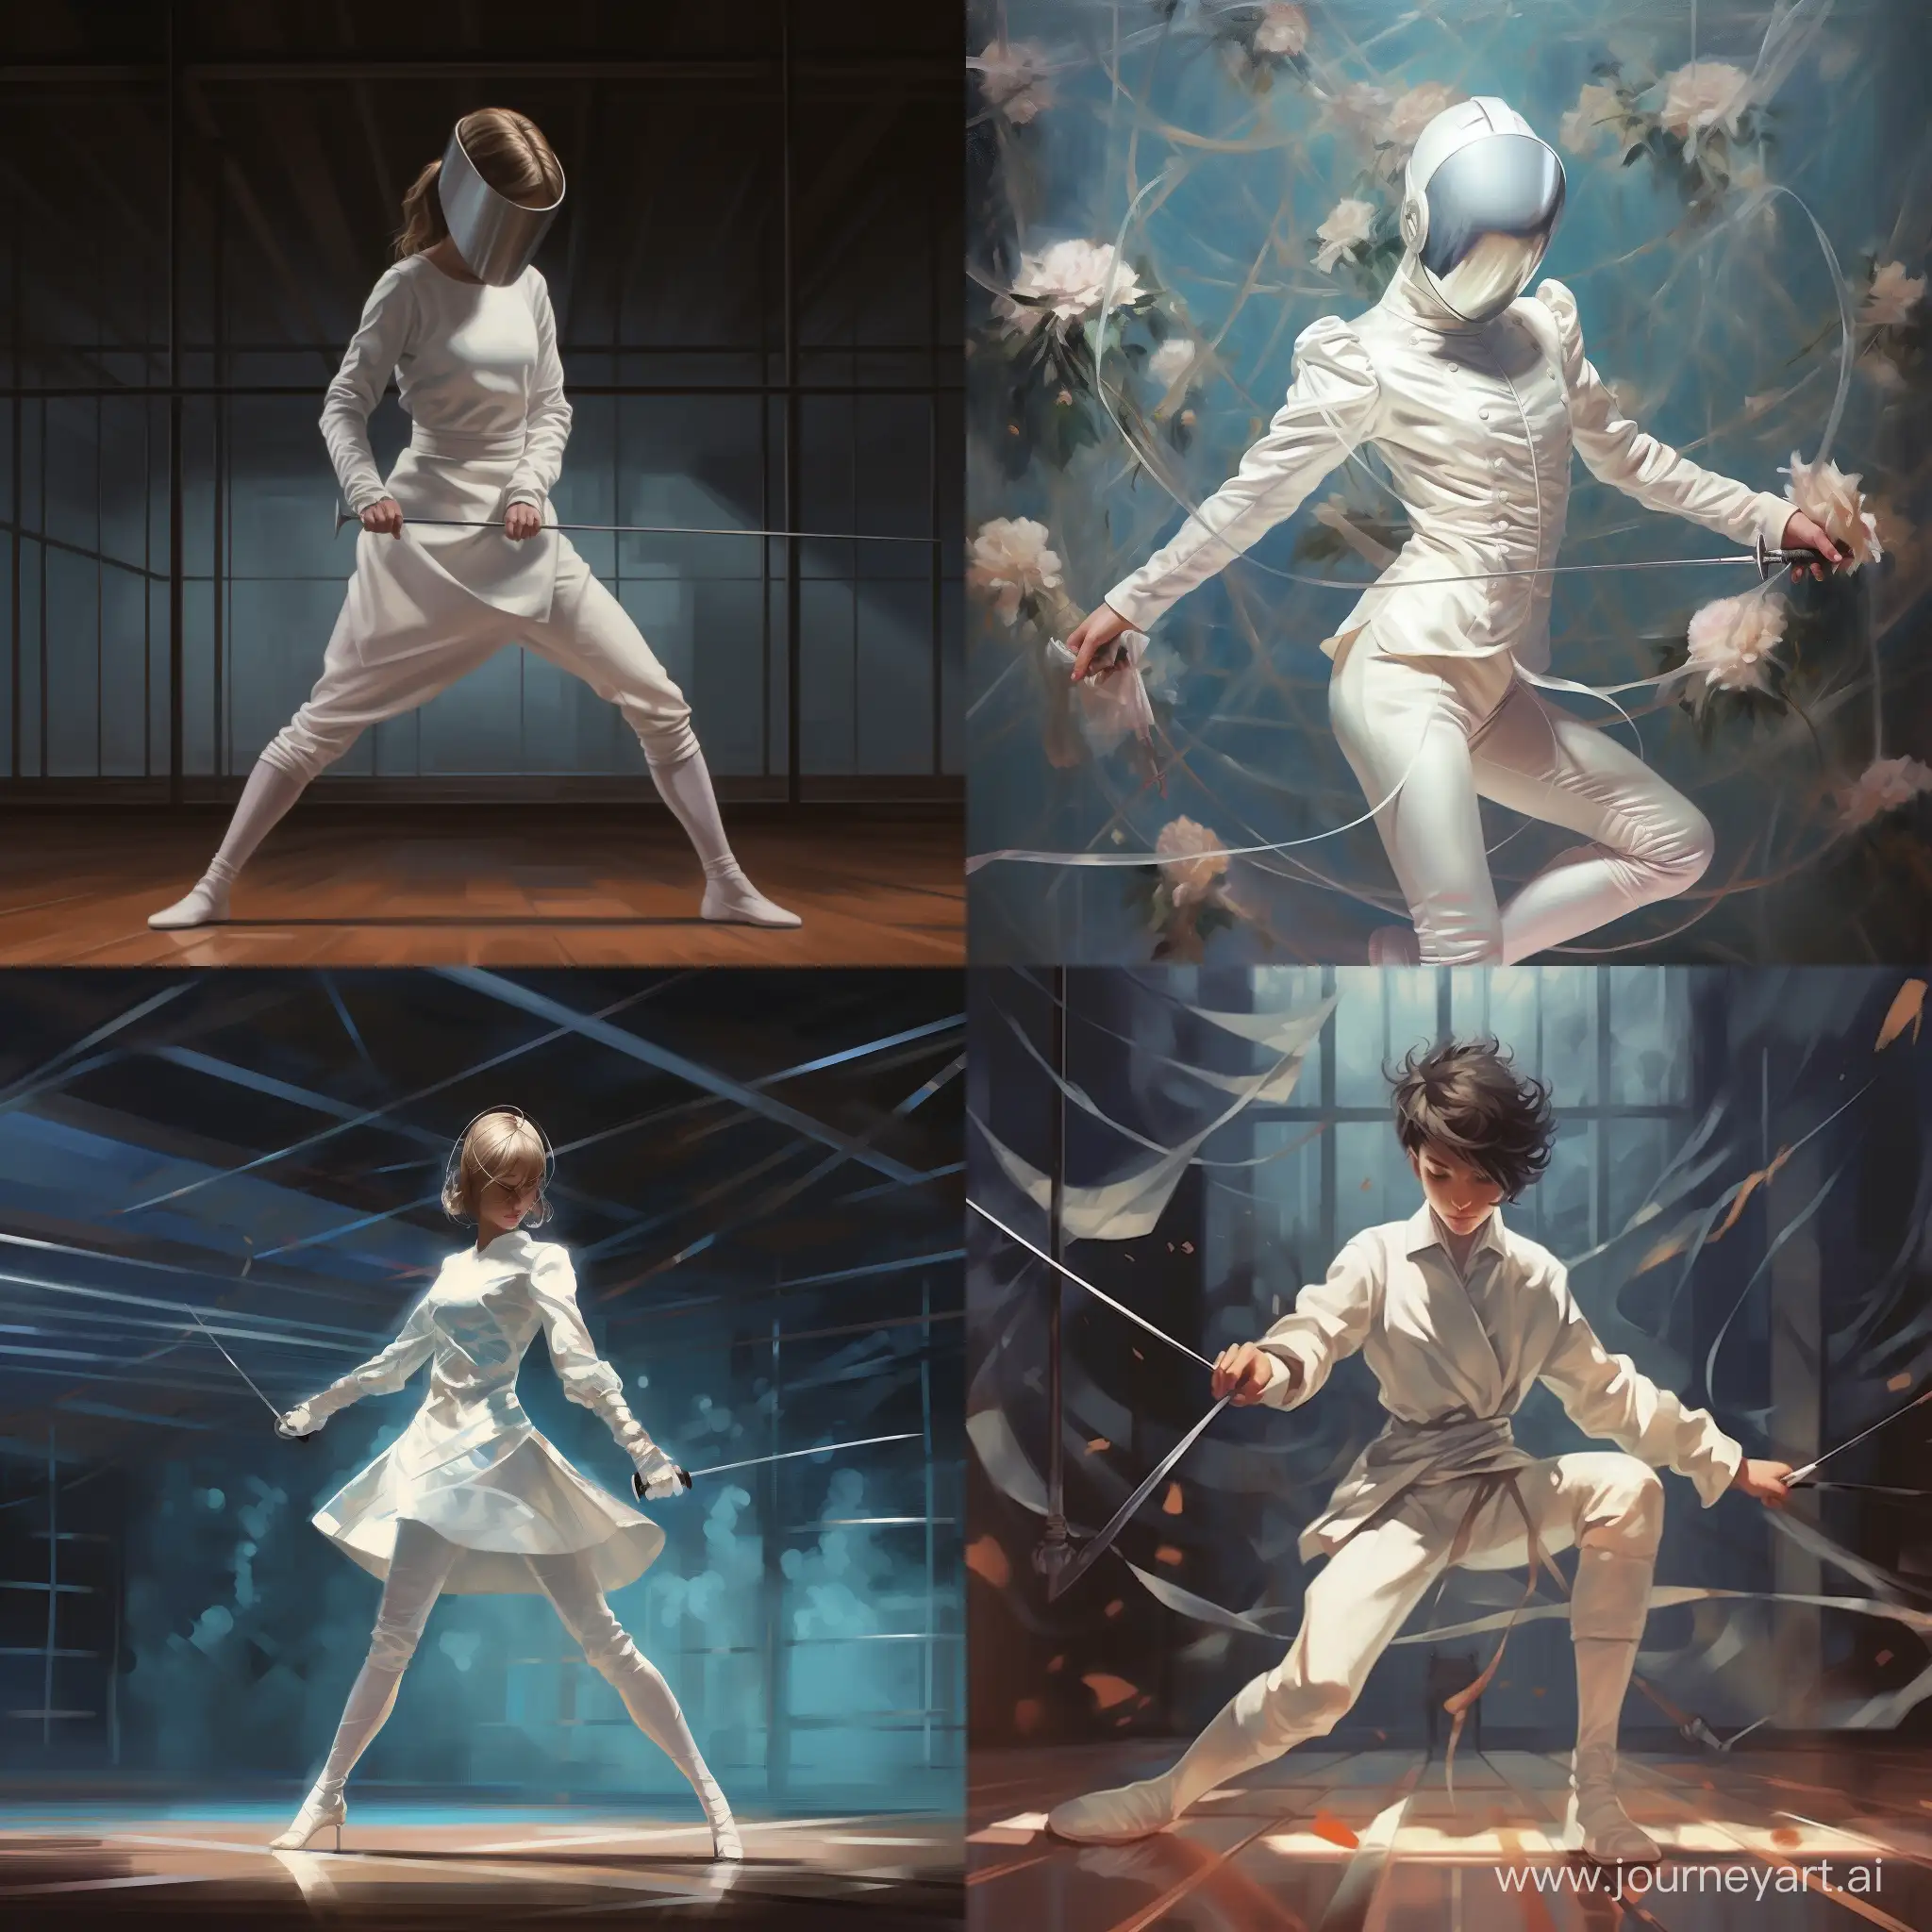 Elegant-Fencer-in-11-Aspect-Ratio-Dynamic-Swordplay-Art